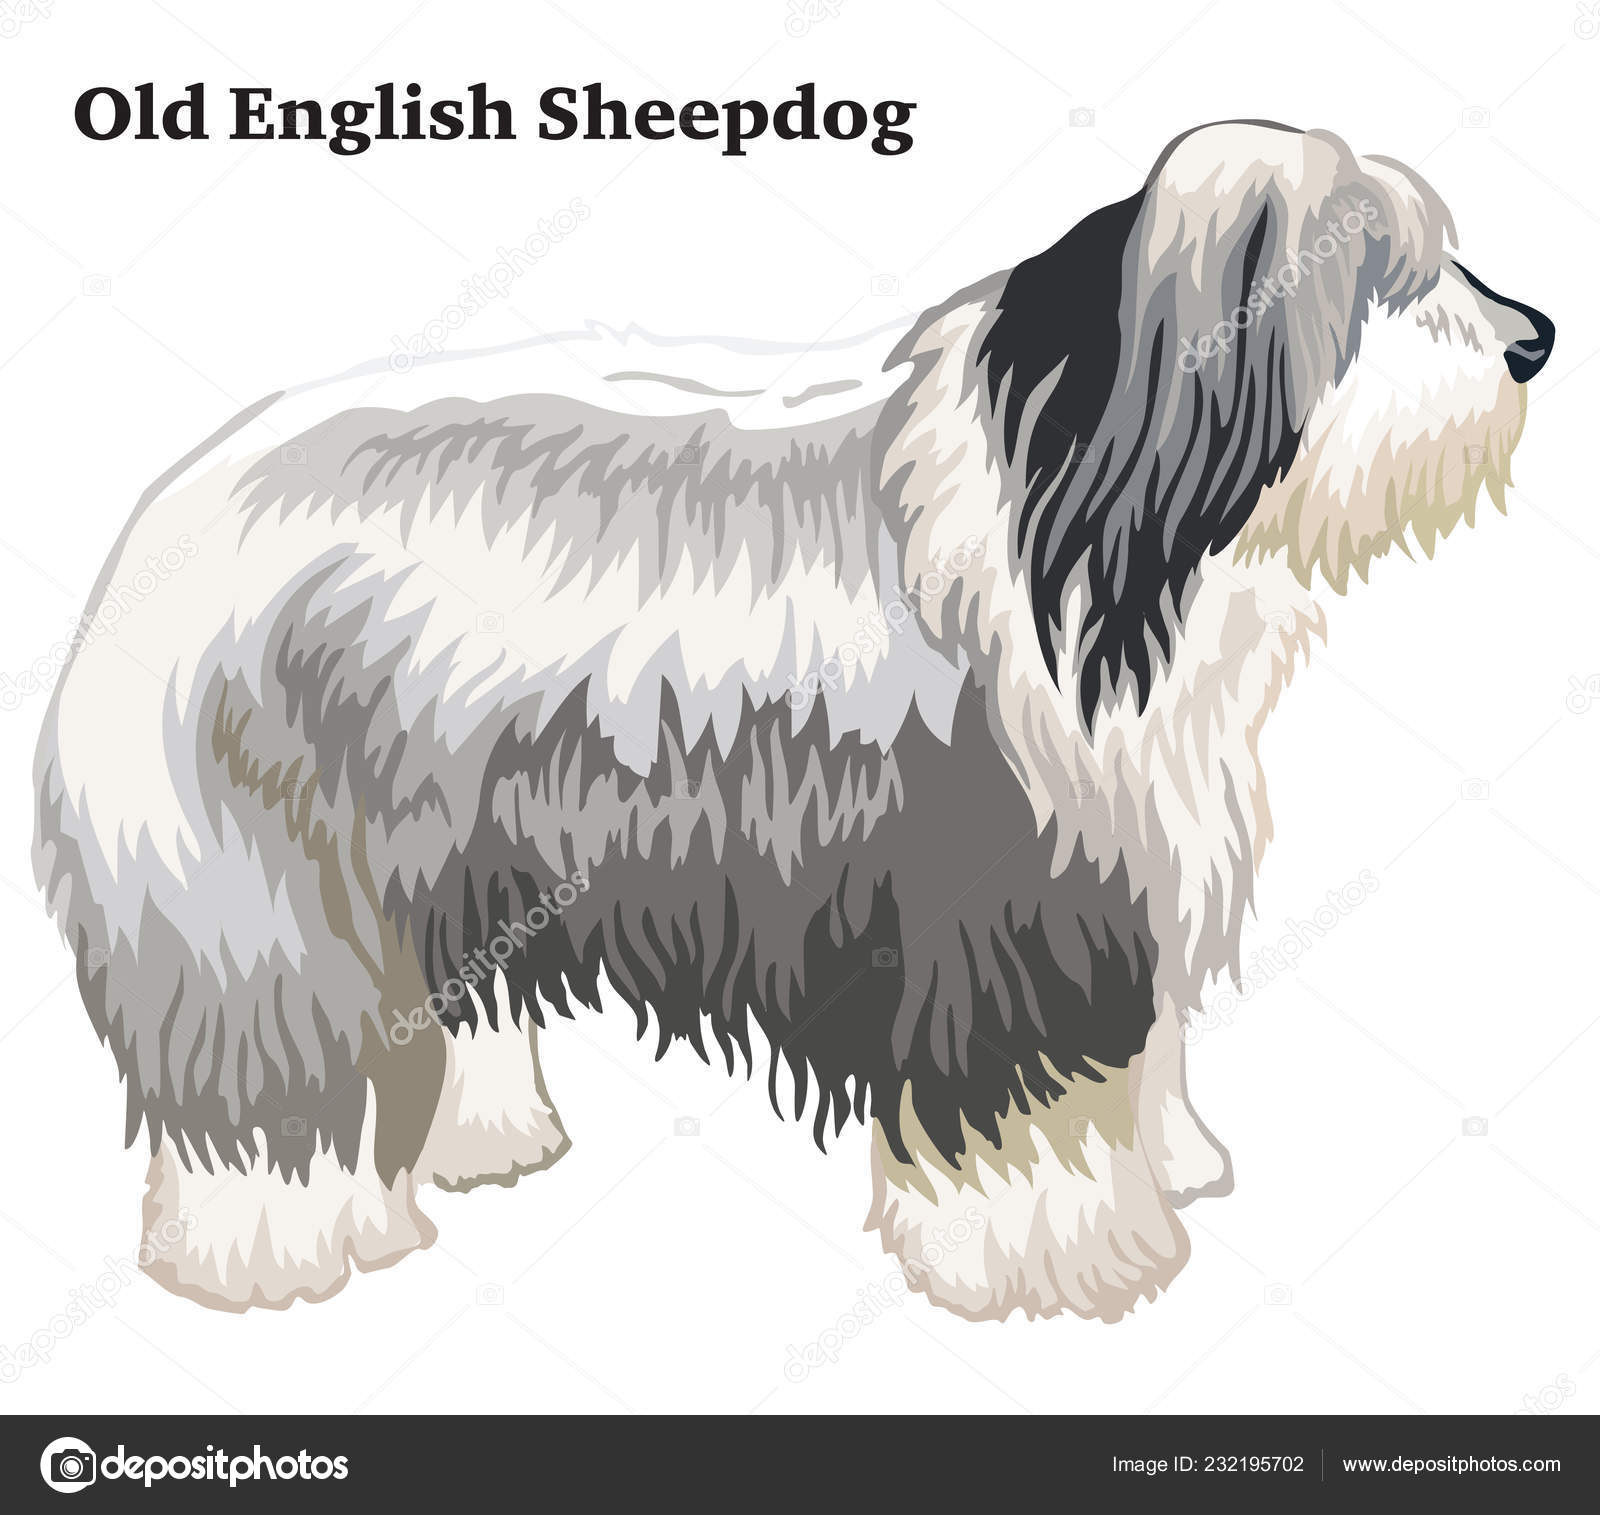 Perro pastor inglés viejo imagen de archivo. Imagen de perro